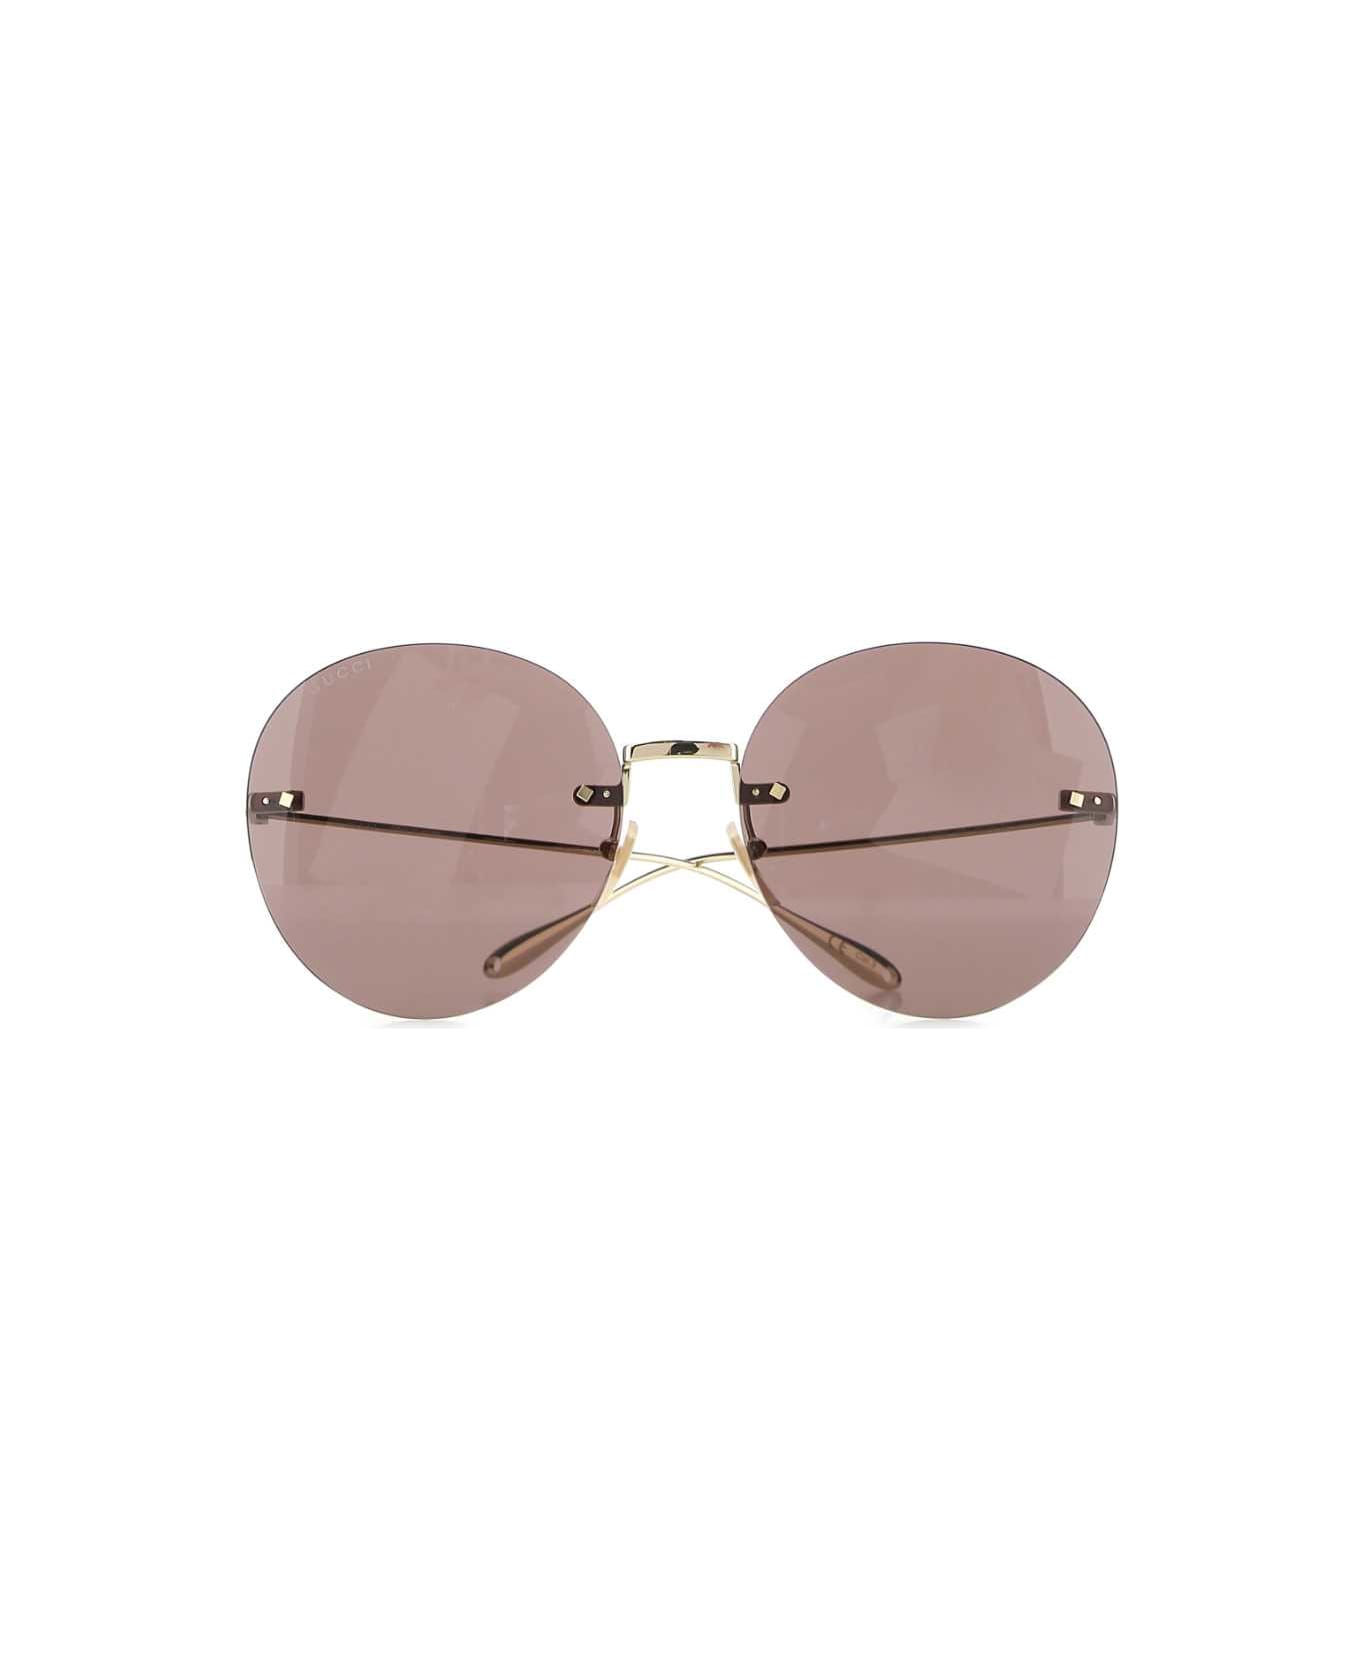 Gucci Gold Metal Sunglasses - 8021